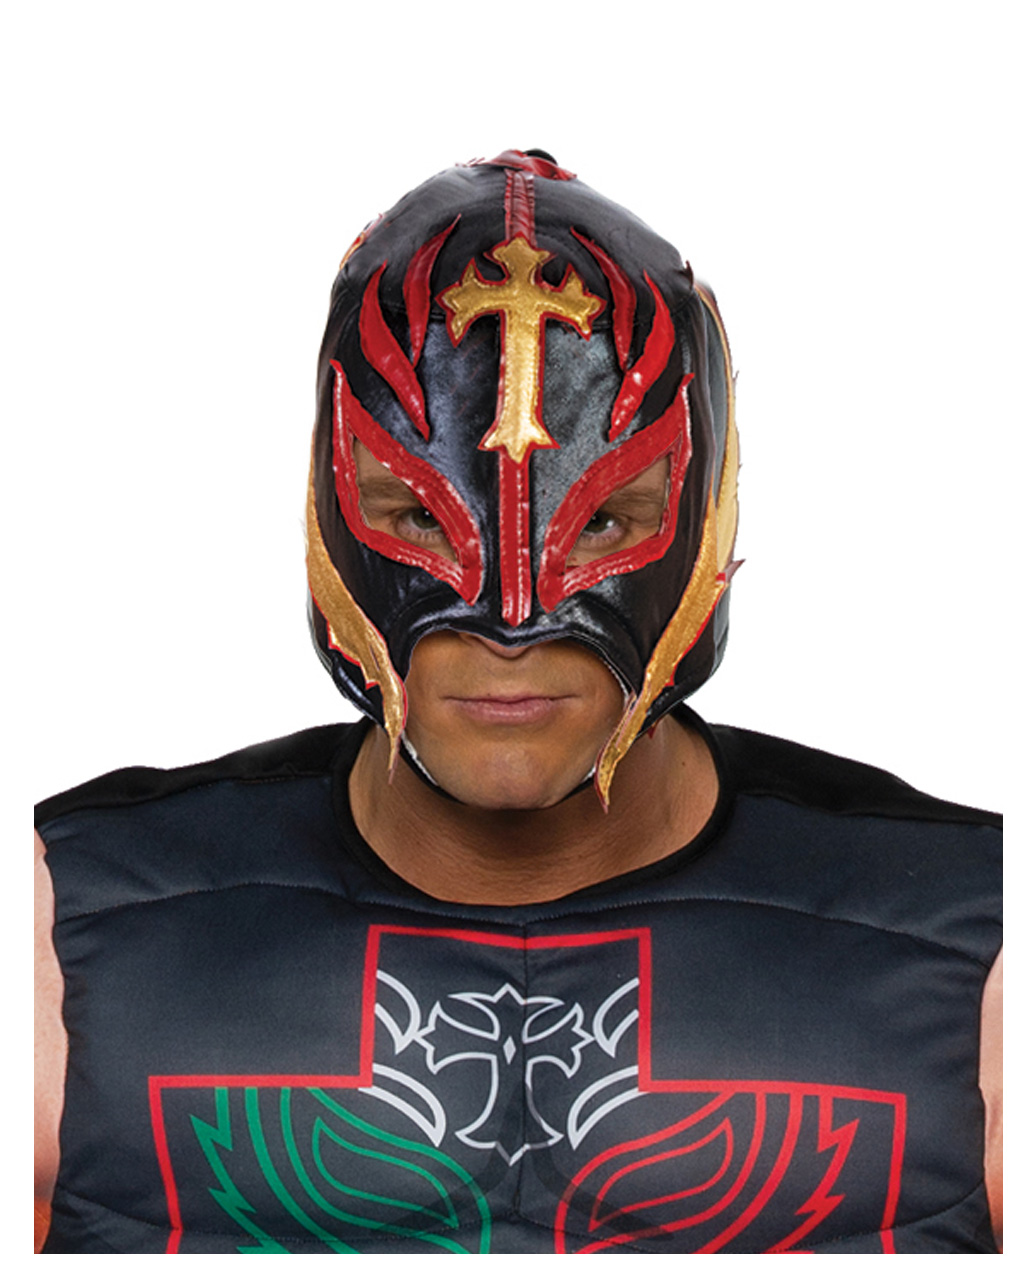 UK Rey Mysterio WWE Wrestling Kostüm Verkleidung Maske Kopie Kinder Kostüm Ray 